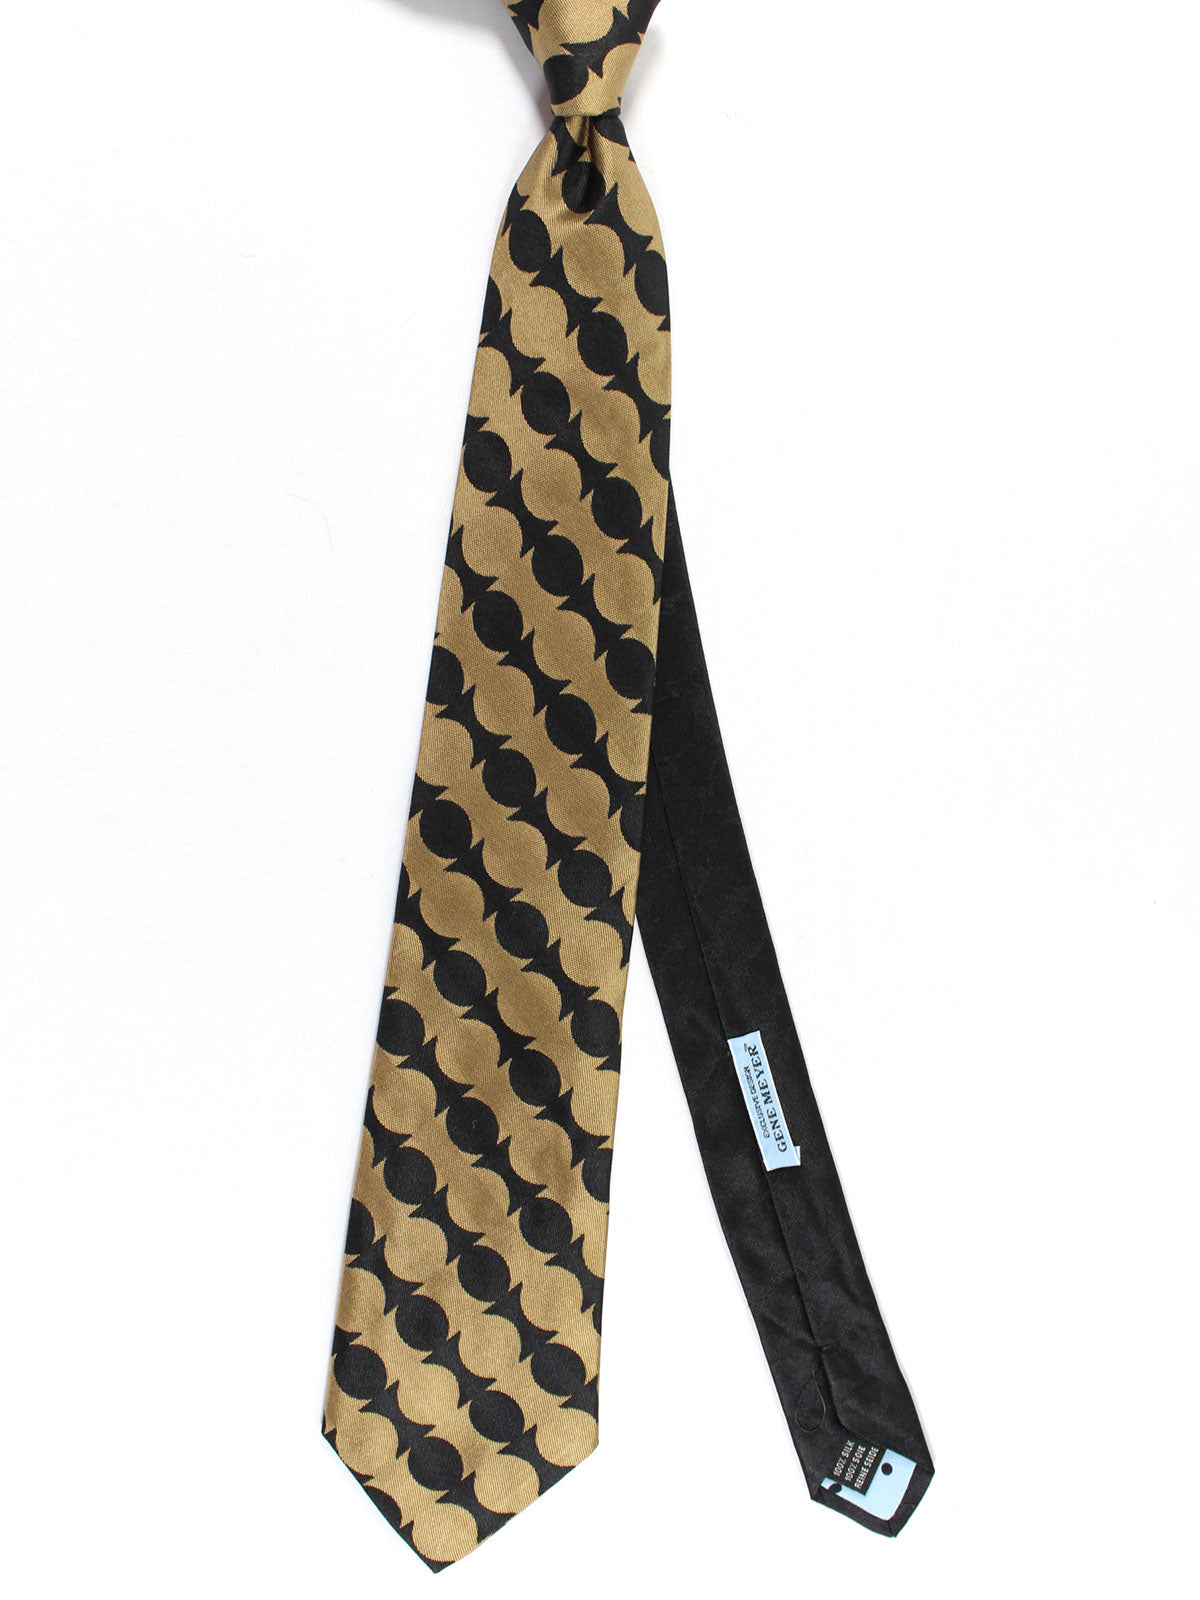 Gene Meyer Tie Black Brown Geometric Design - Hand Made in Italy